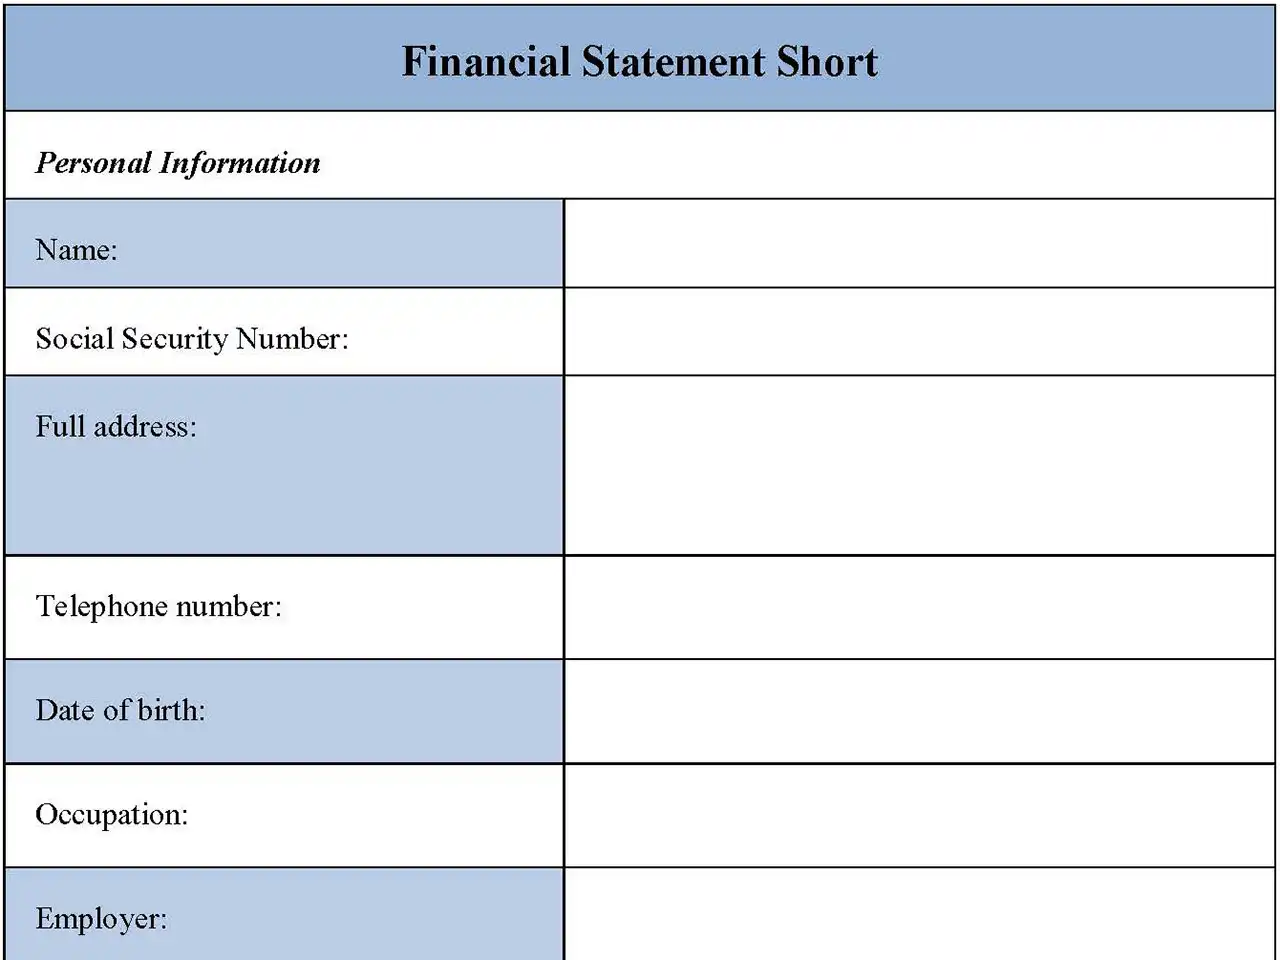 Financial Statement Short Form